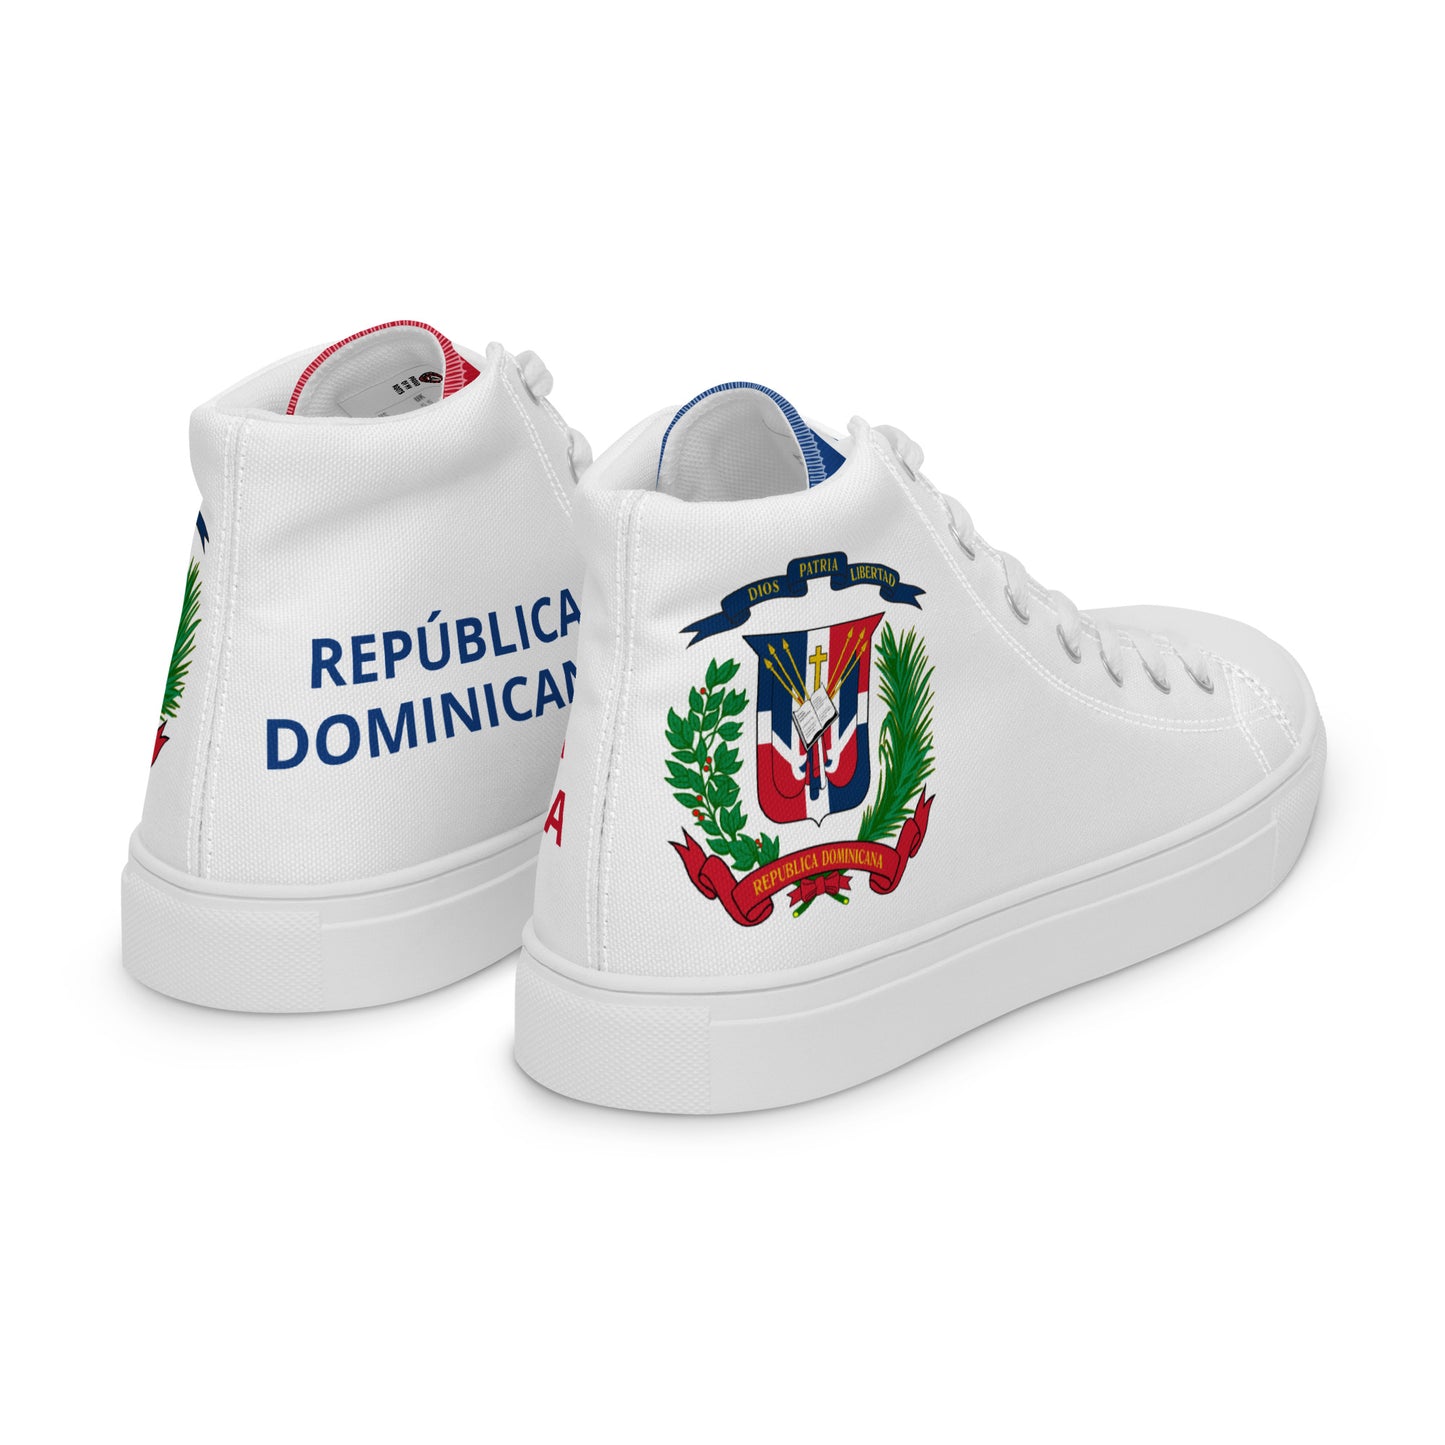 República Dominicana - Women - White - High top shoes